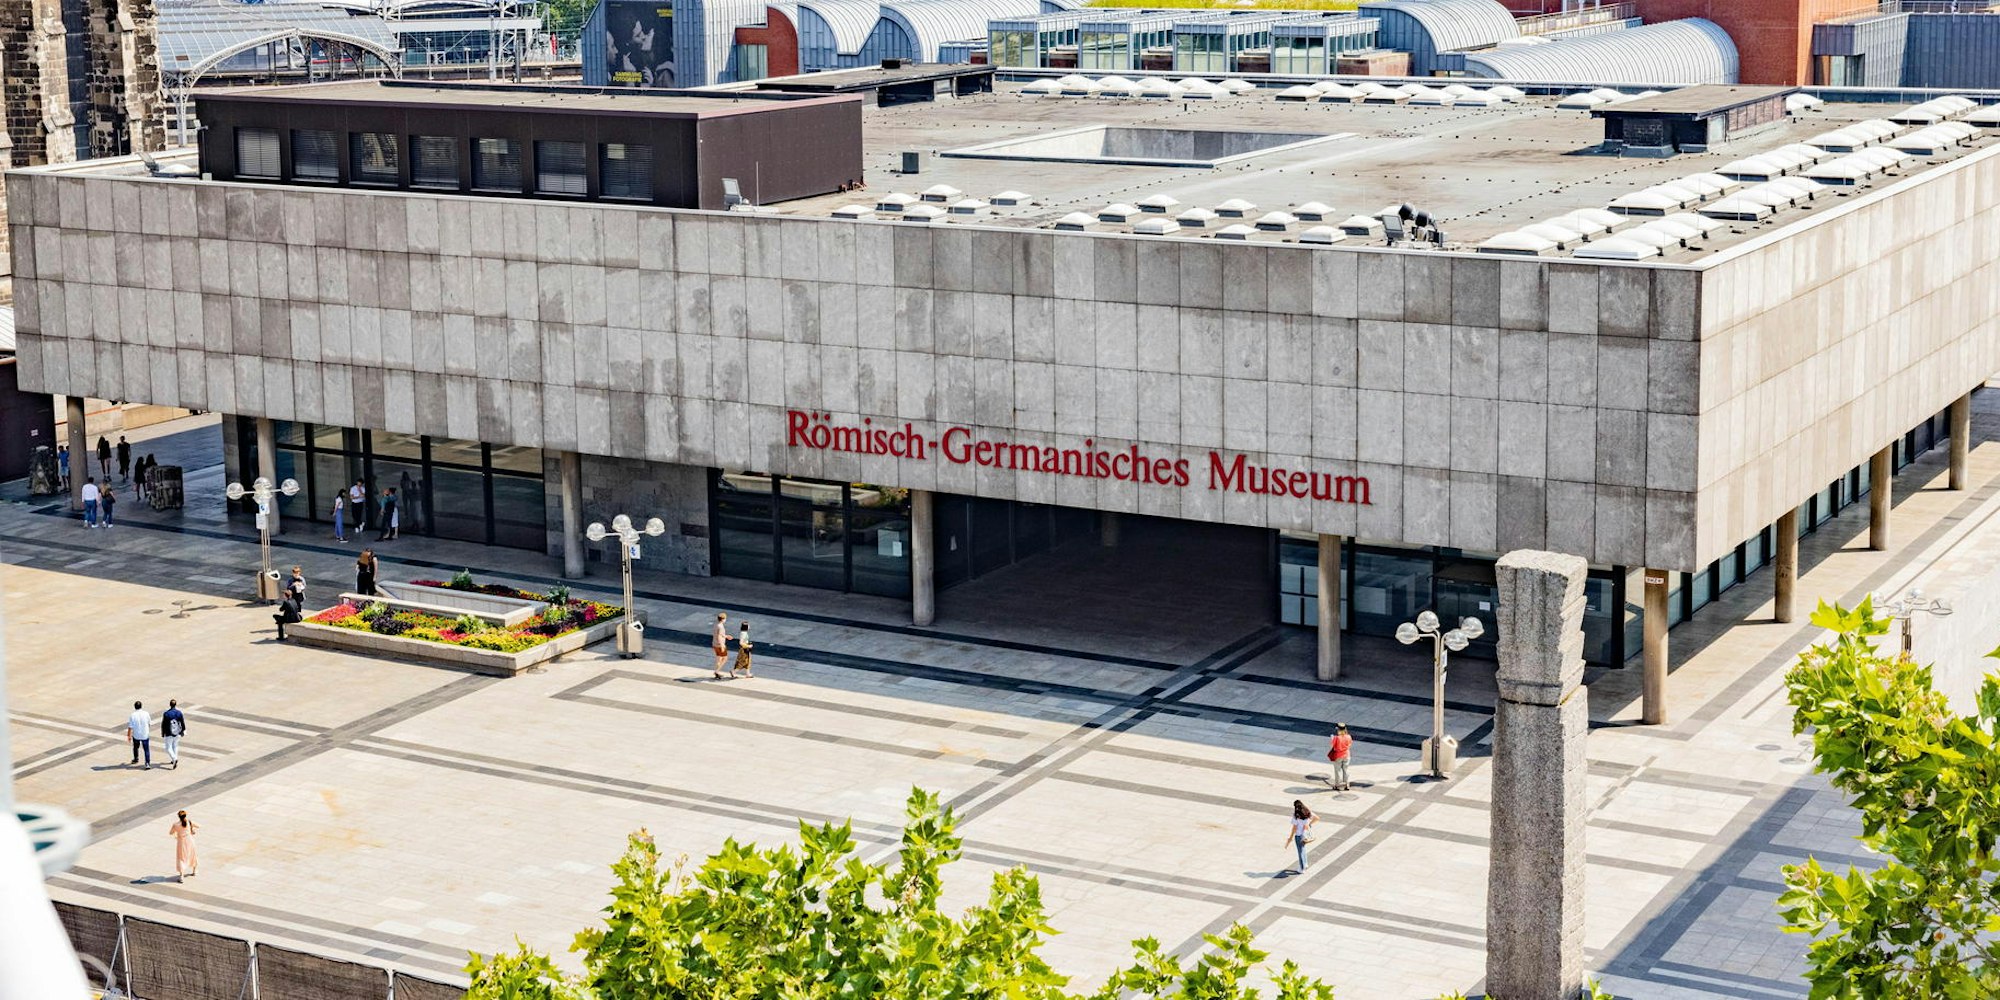 k_roemisch_germanisches_museum_rgm_mbo001